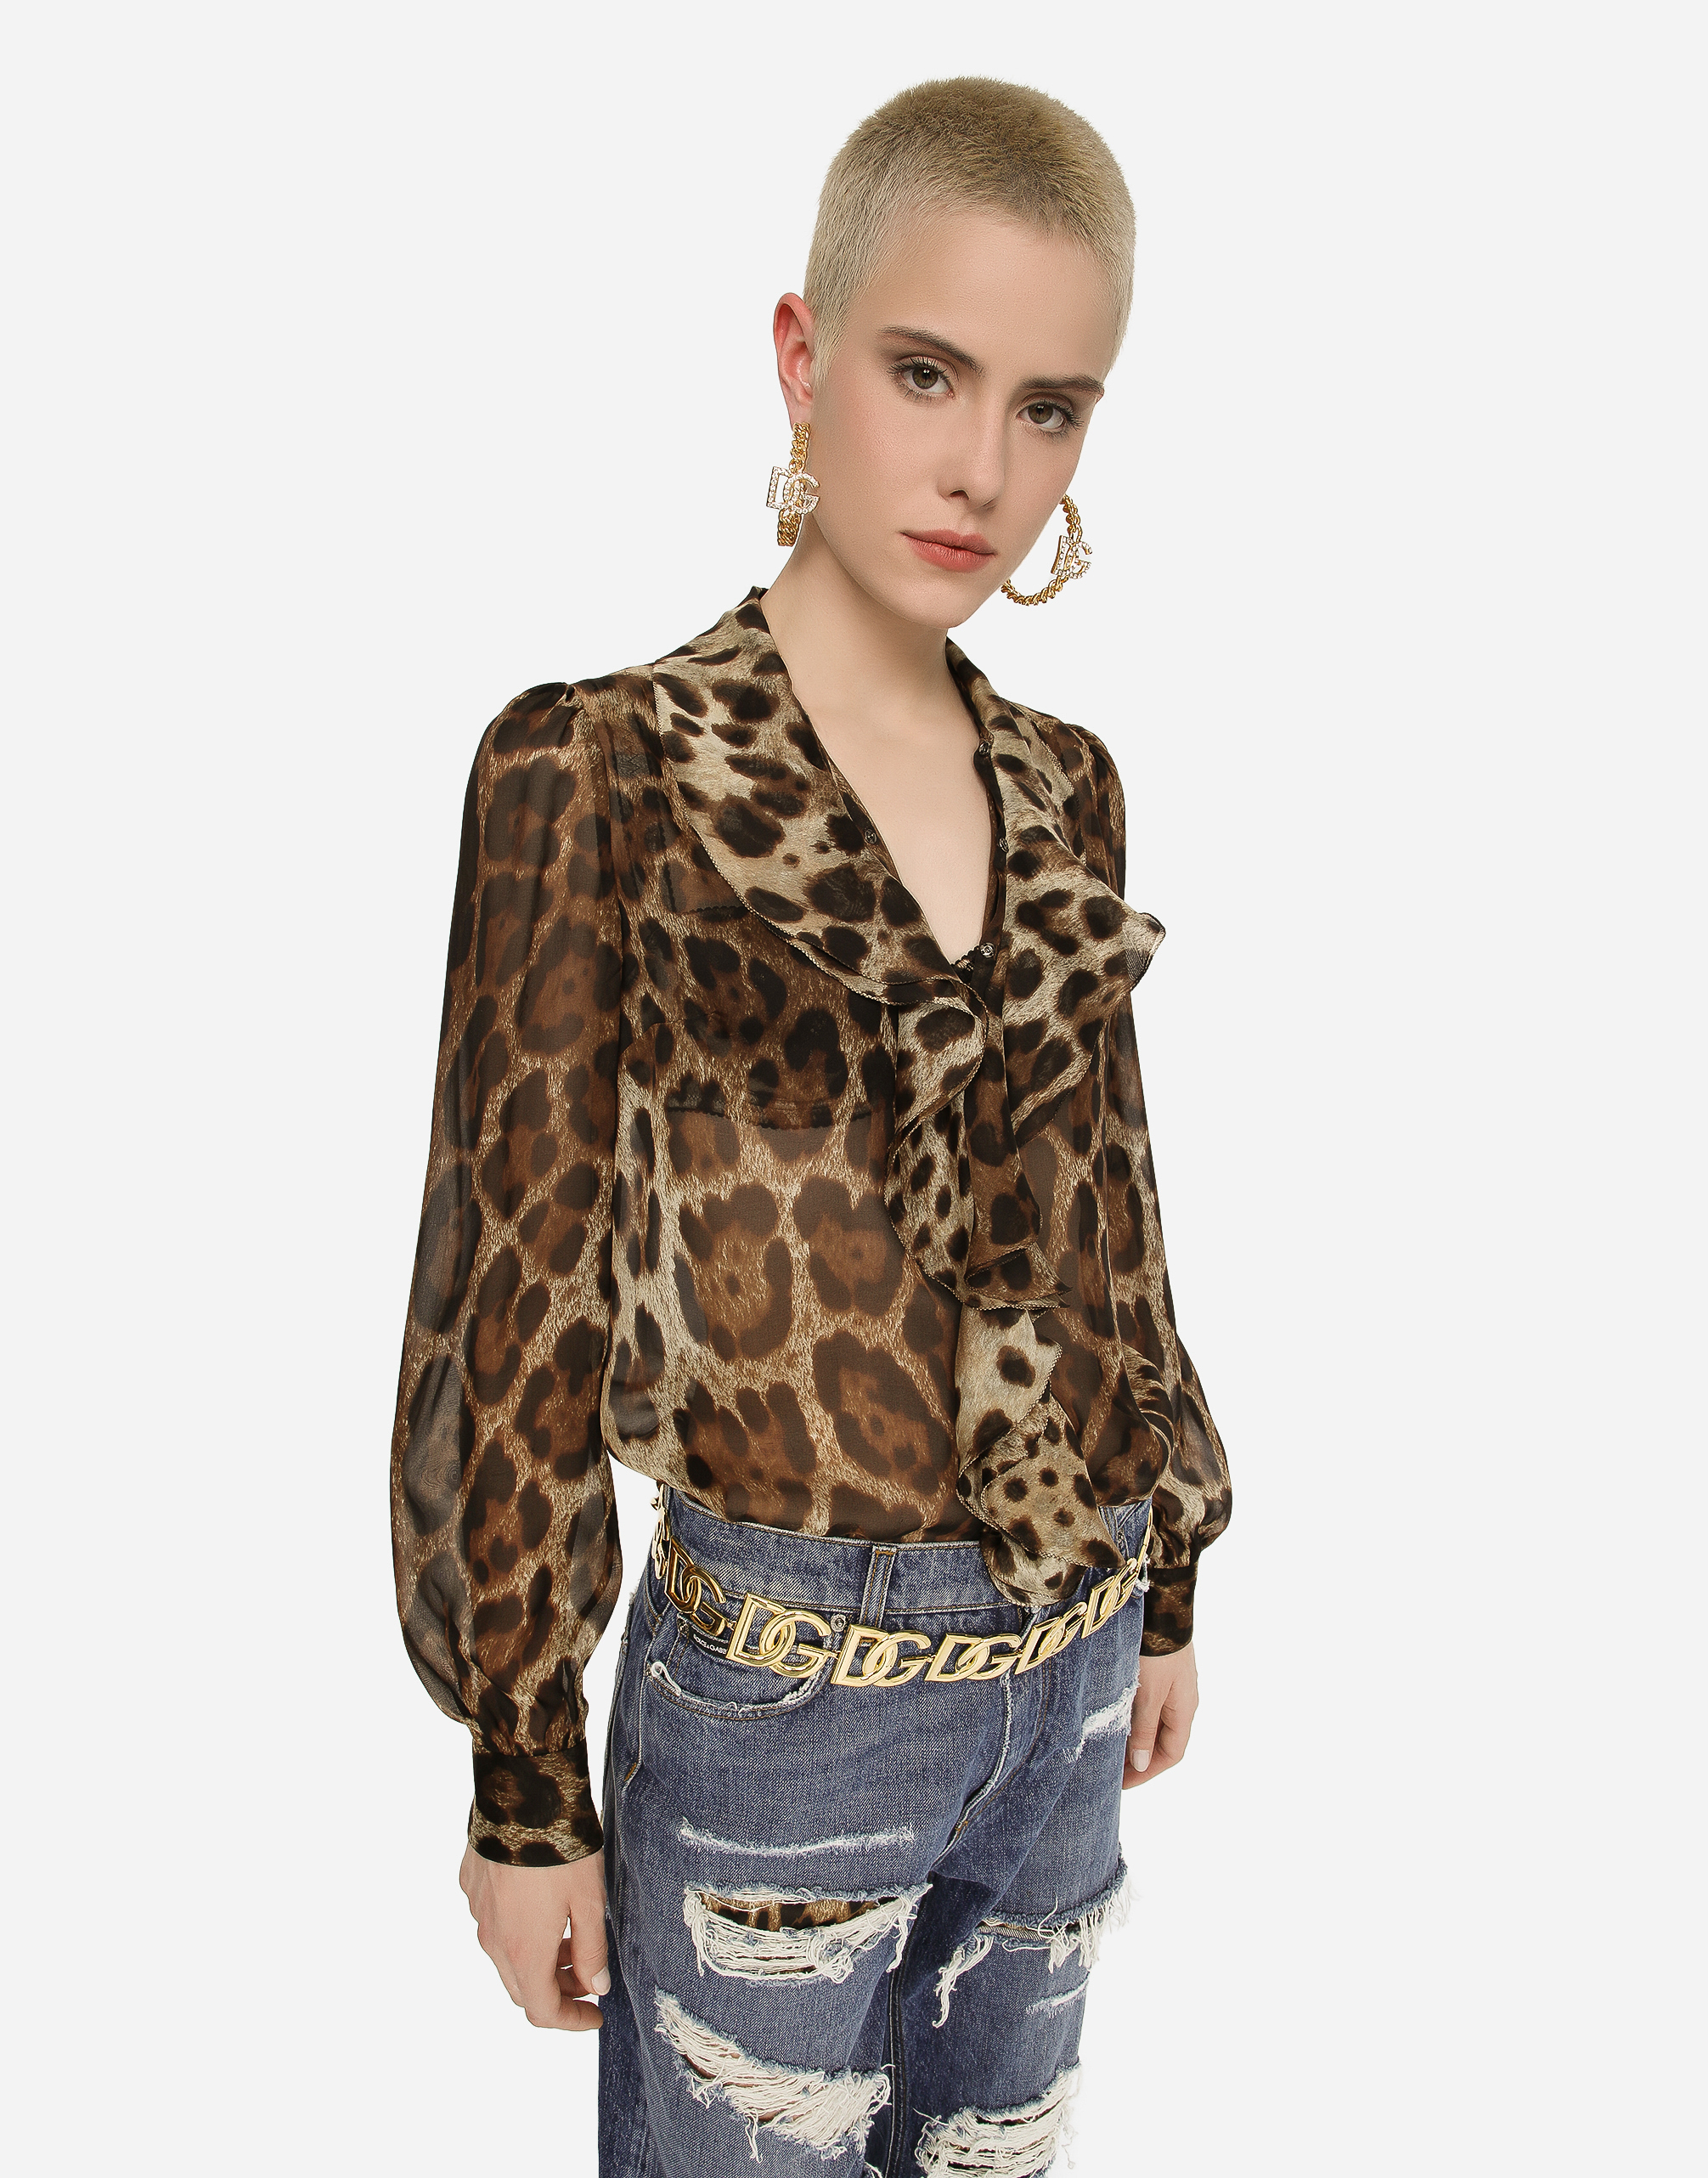 Leopard-print chiffon shirt with ruches